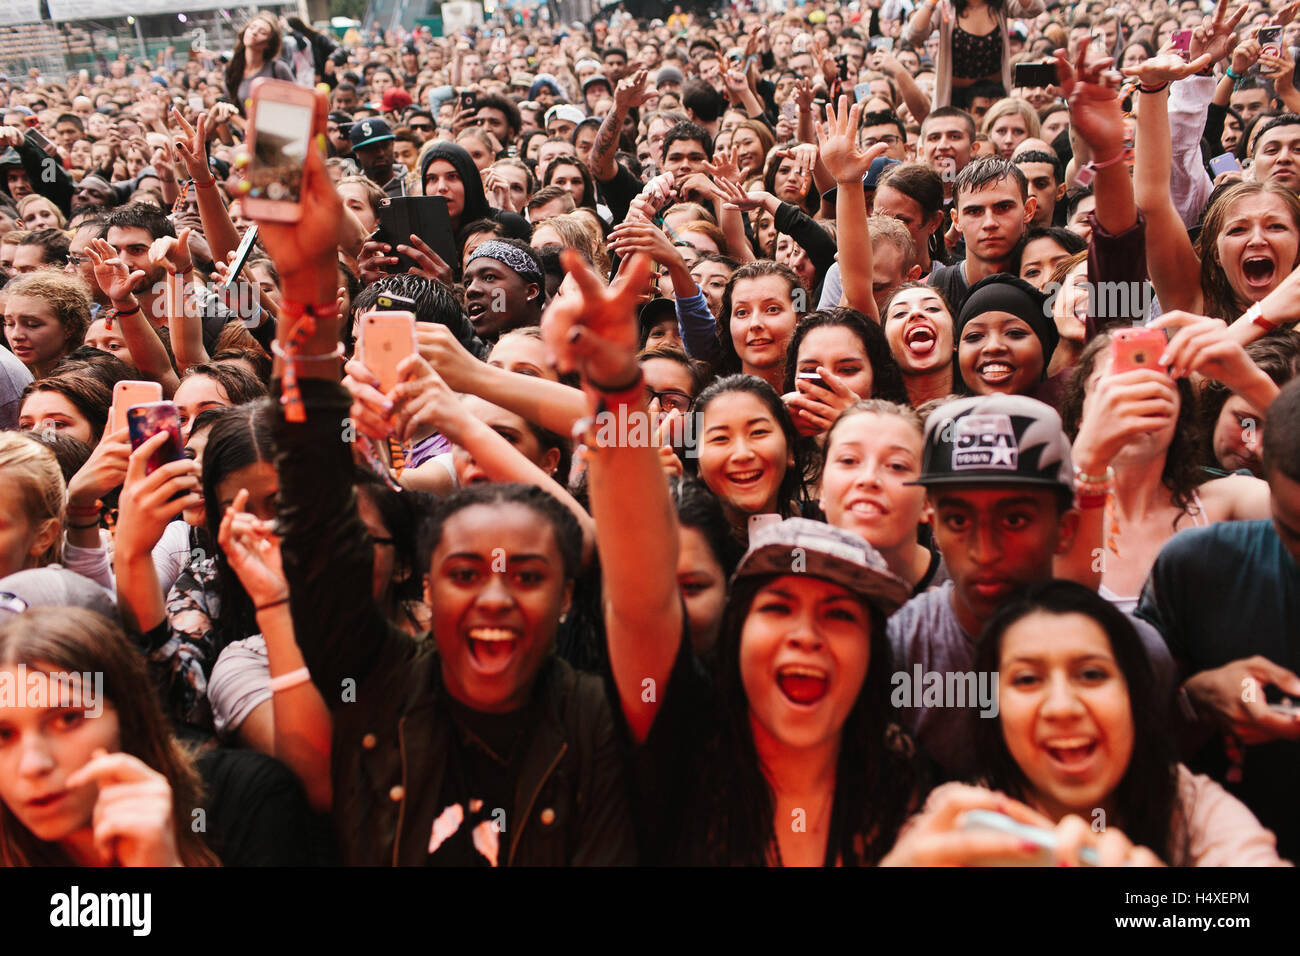 Crowd atmosphere at Bumbershoot Festival on September 5, 2015 in Seattle, Washington. Stock Photo